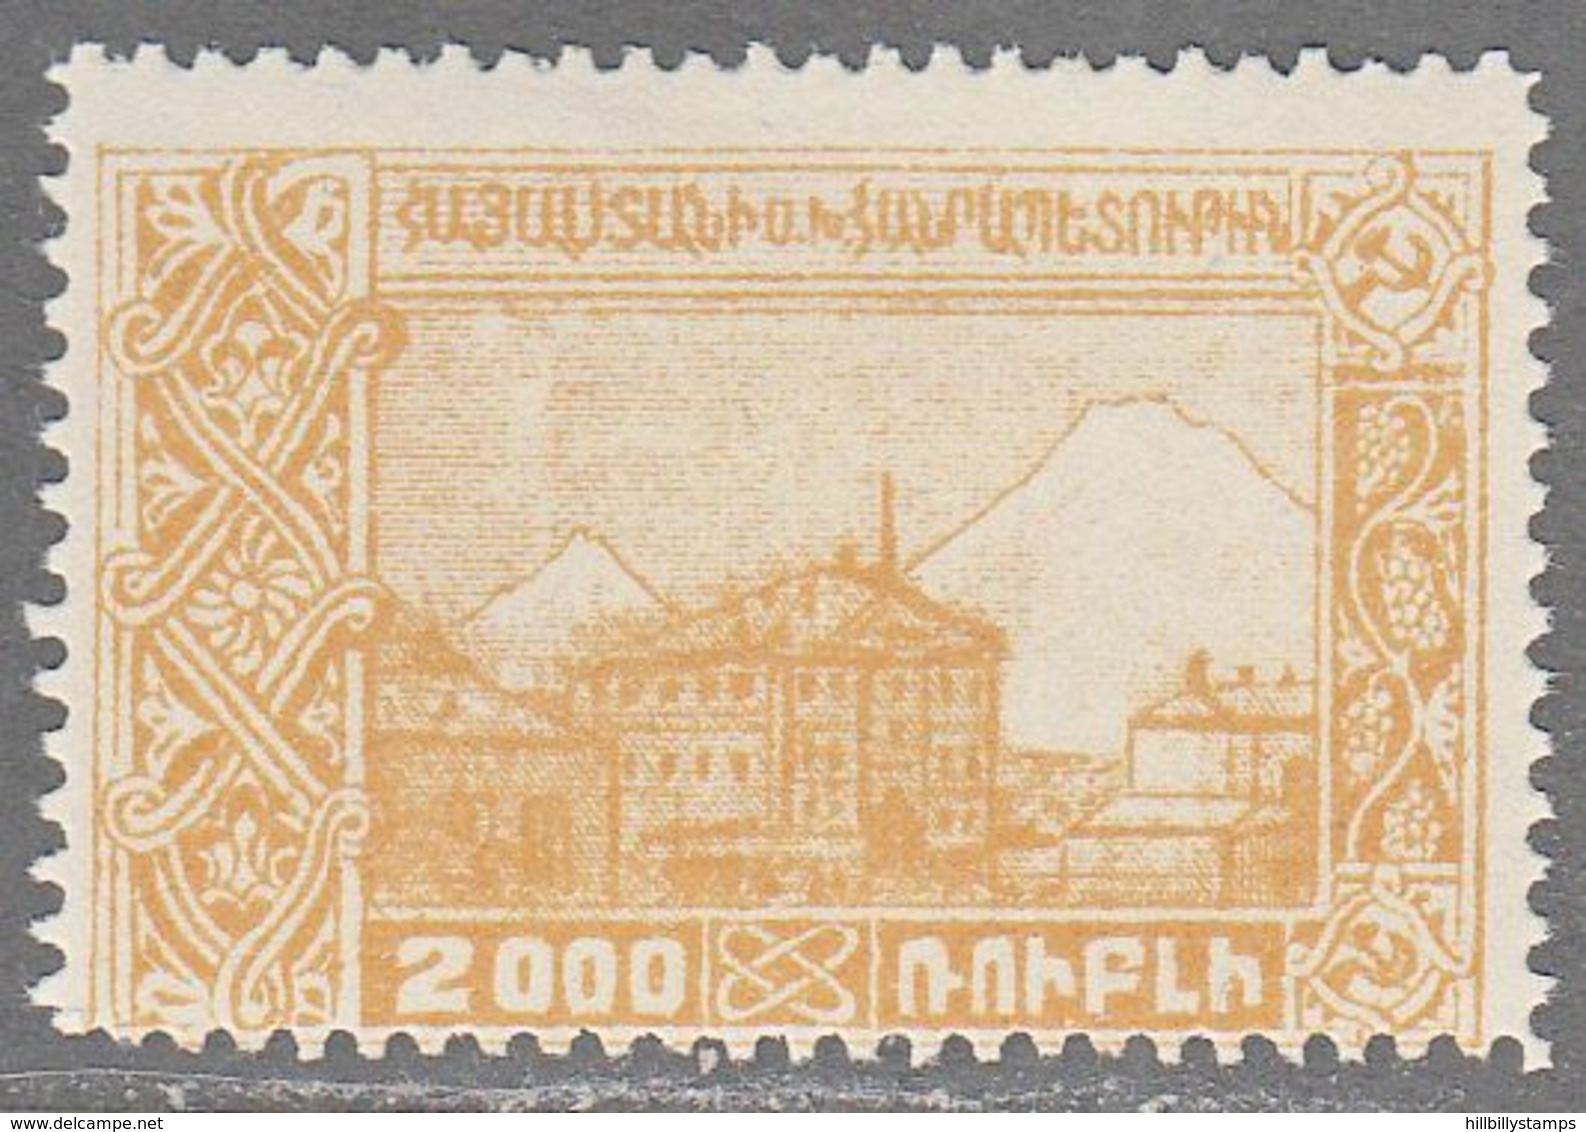 ARMENIA   SCOTT NO. 288   MINT HINGED   YEAR  1921 - Armenia